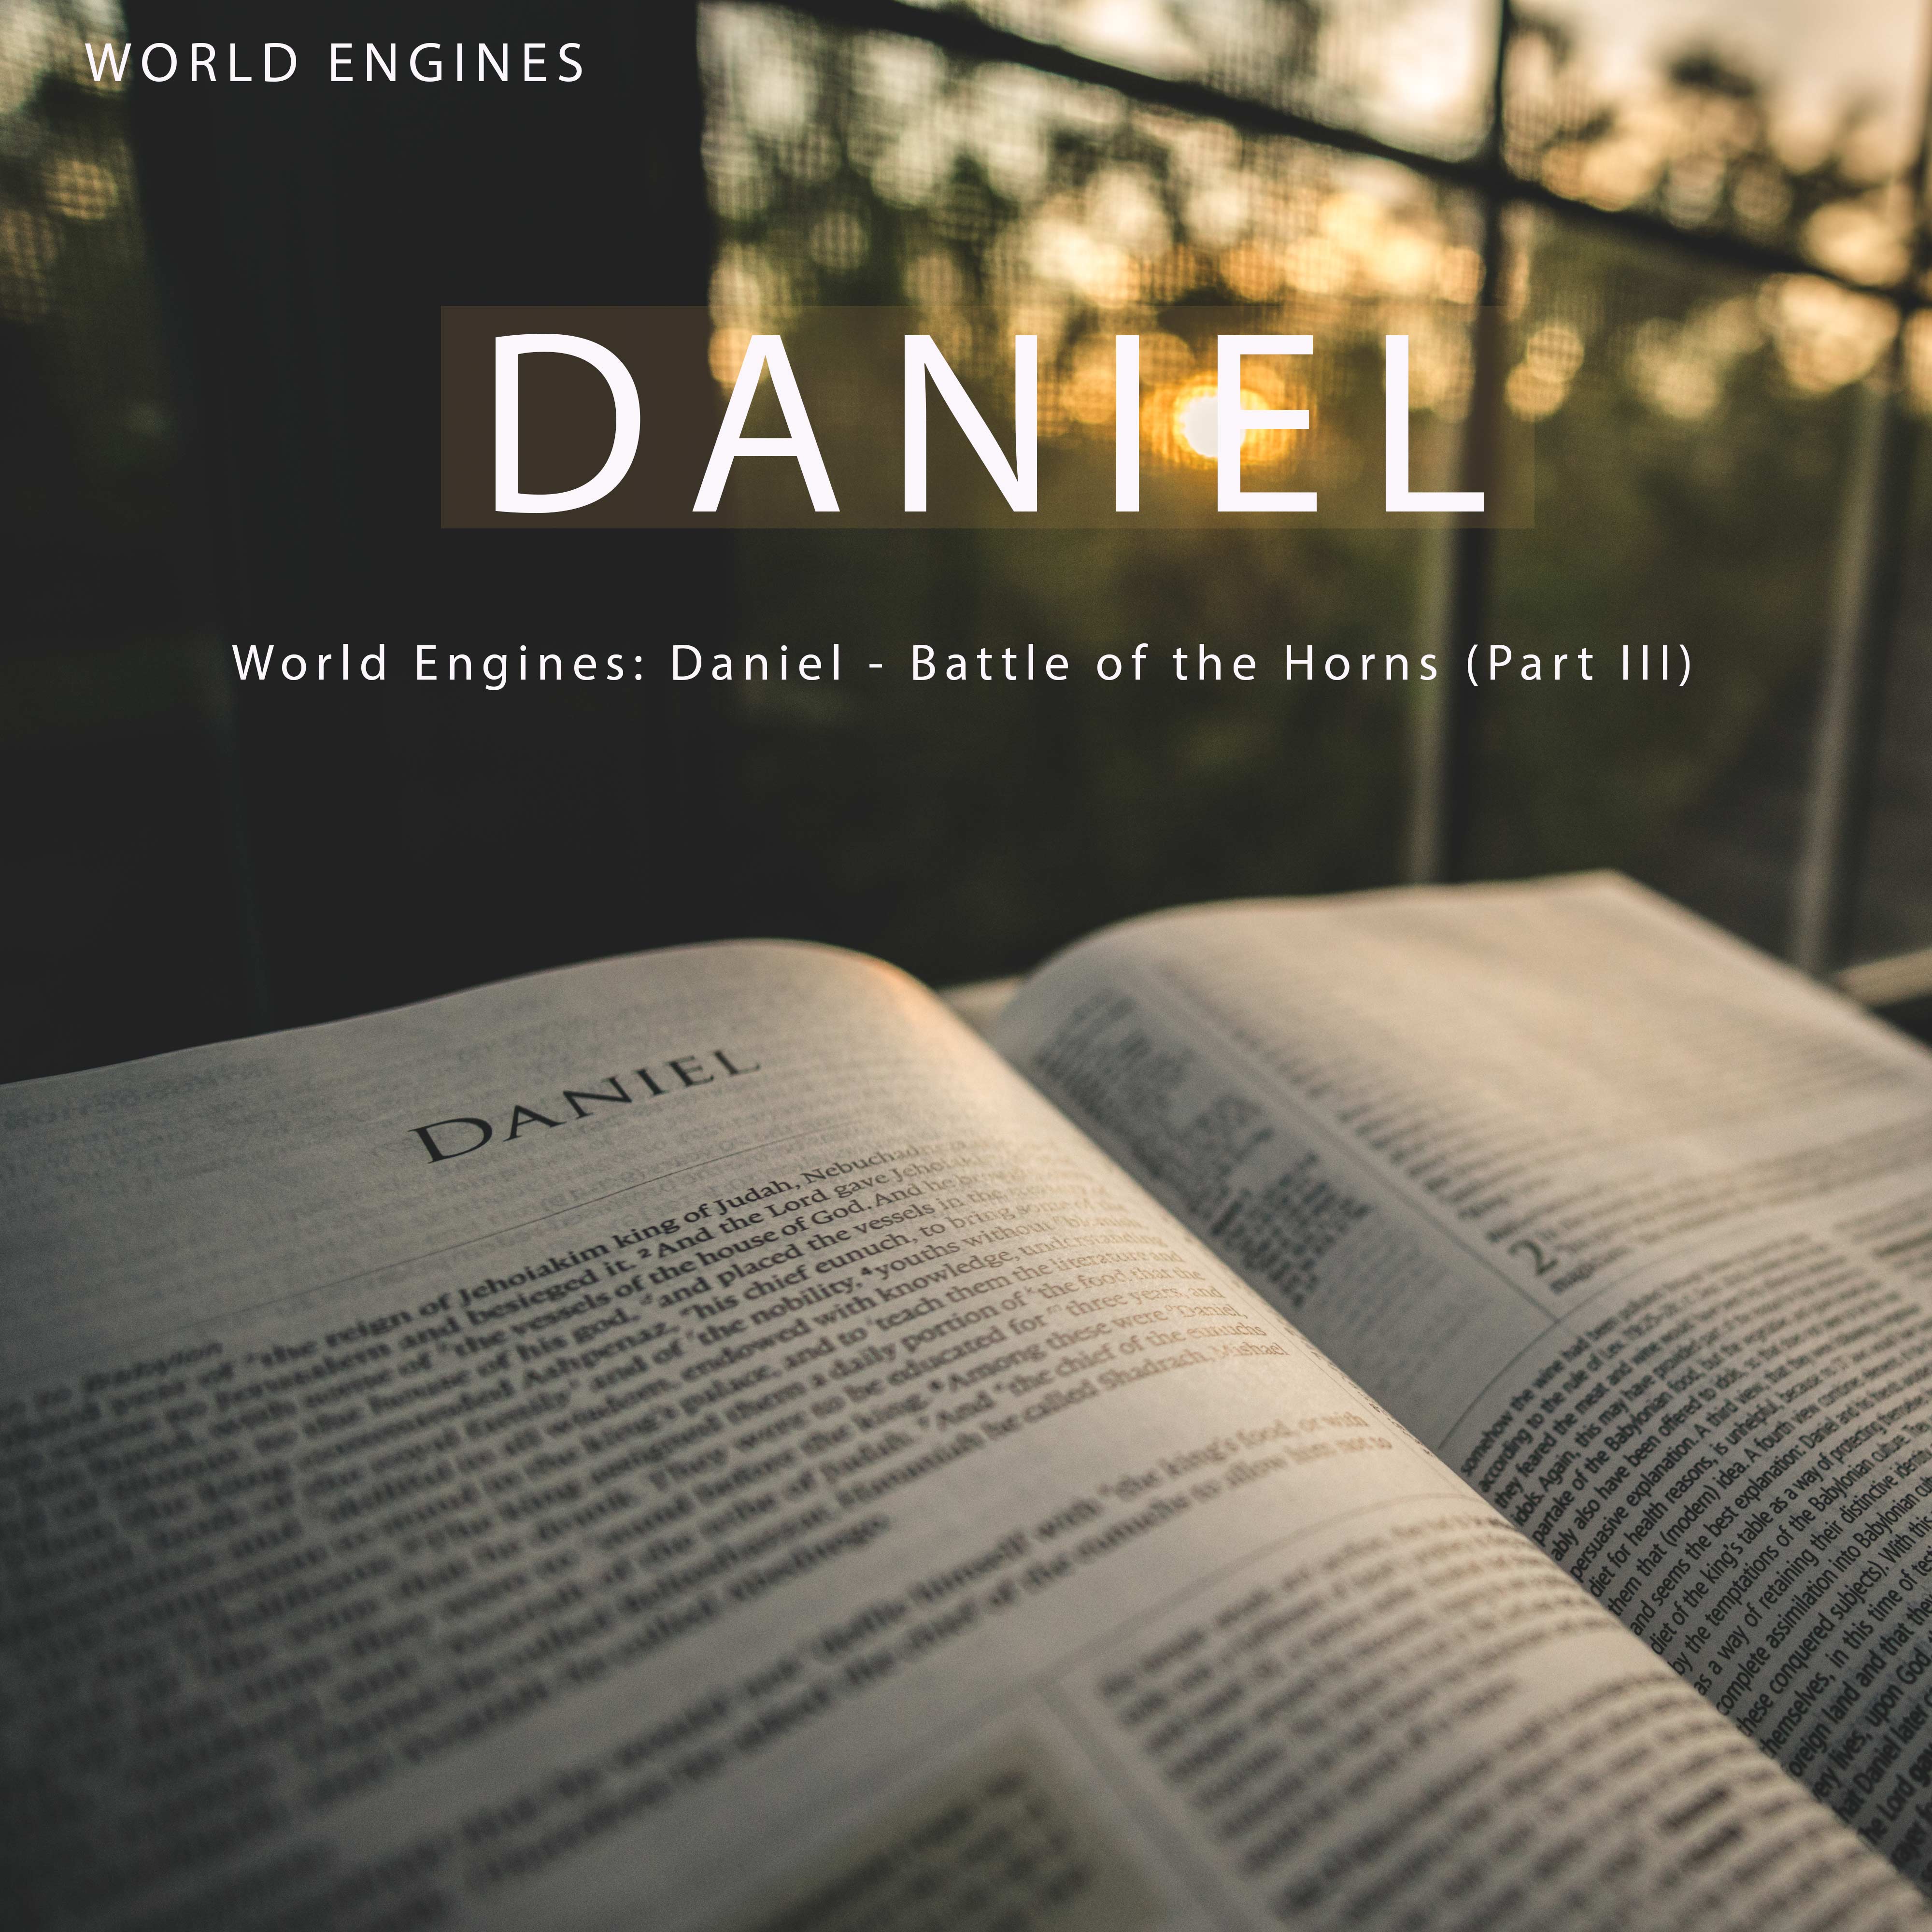 World Engines: Daniel - Biblical Response to Crisis (Part II)